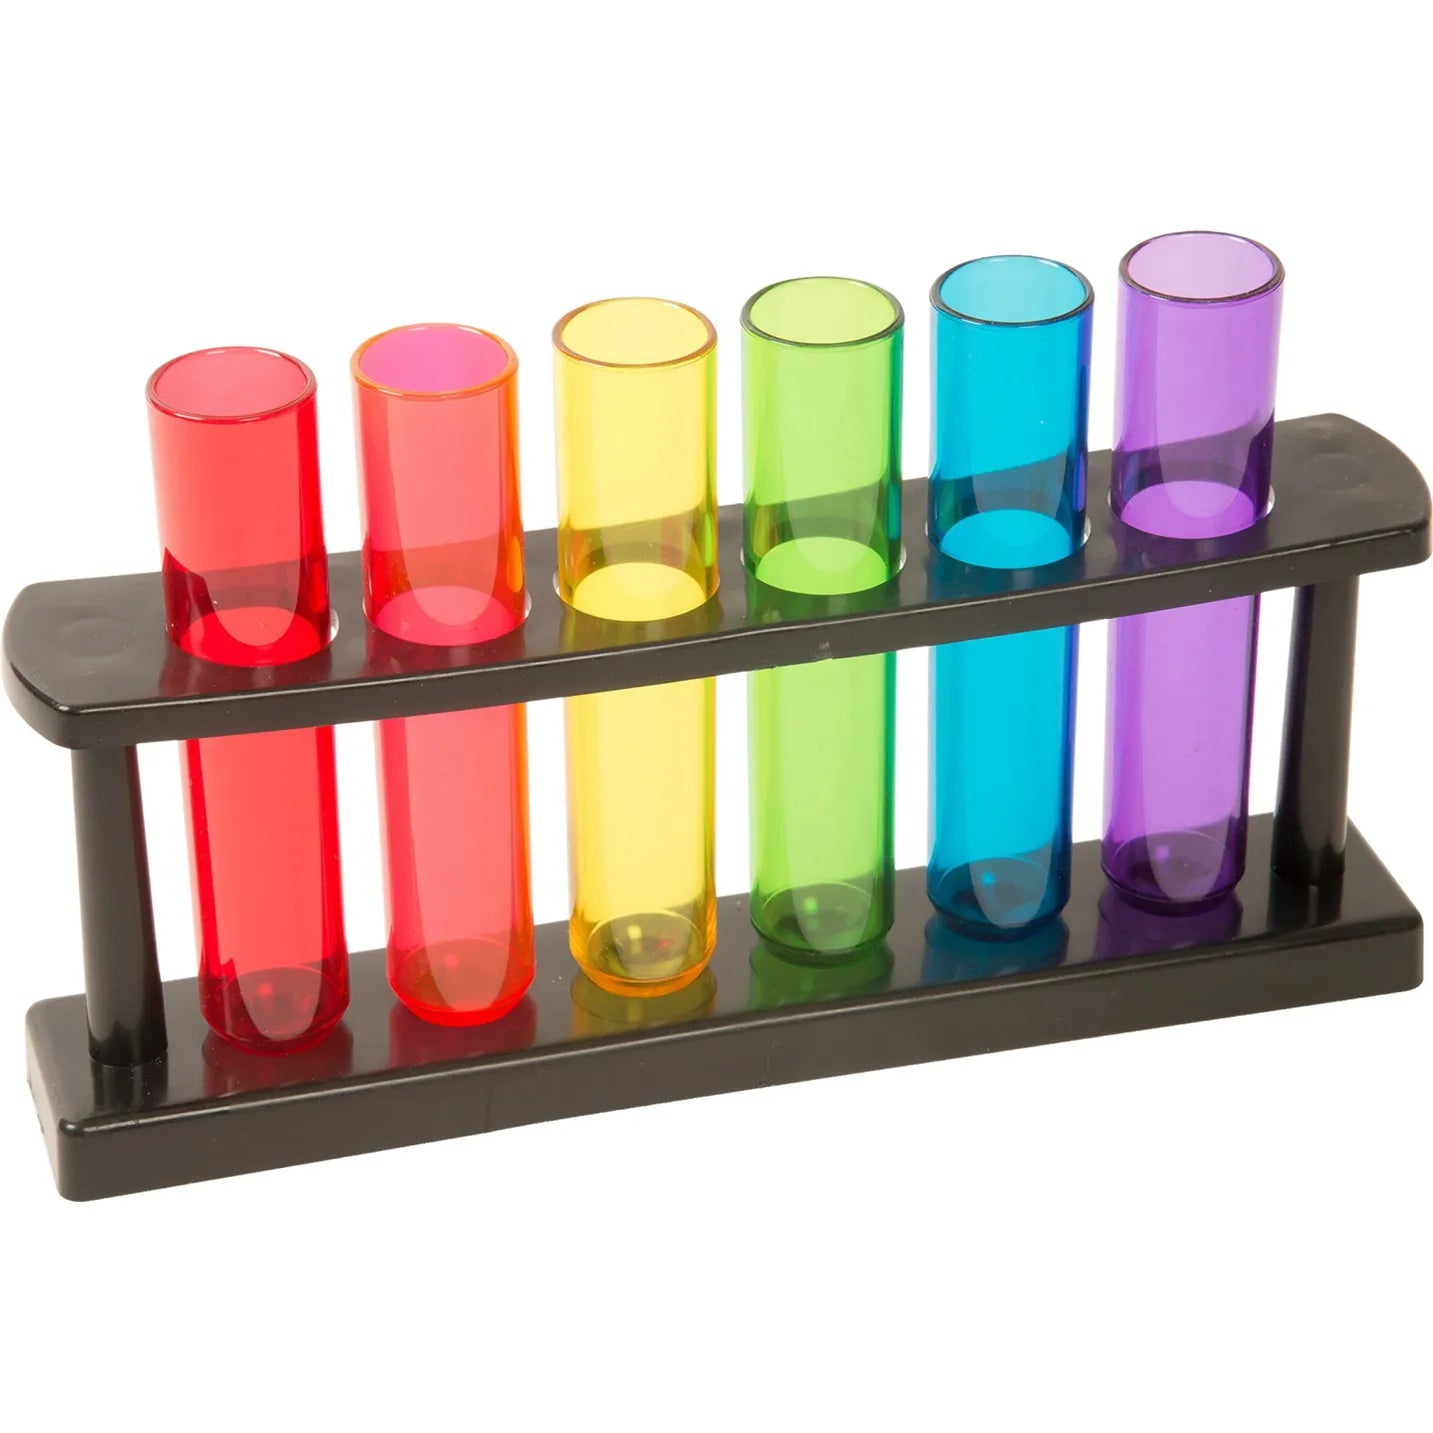 Children Chemistry Test Tube Sensory Play Science Vials OR Beakers